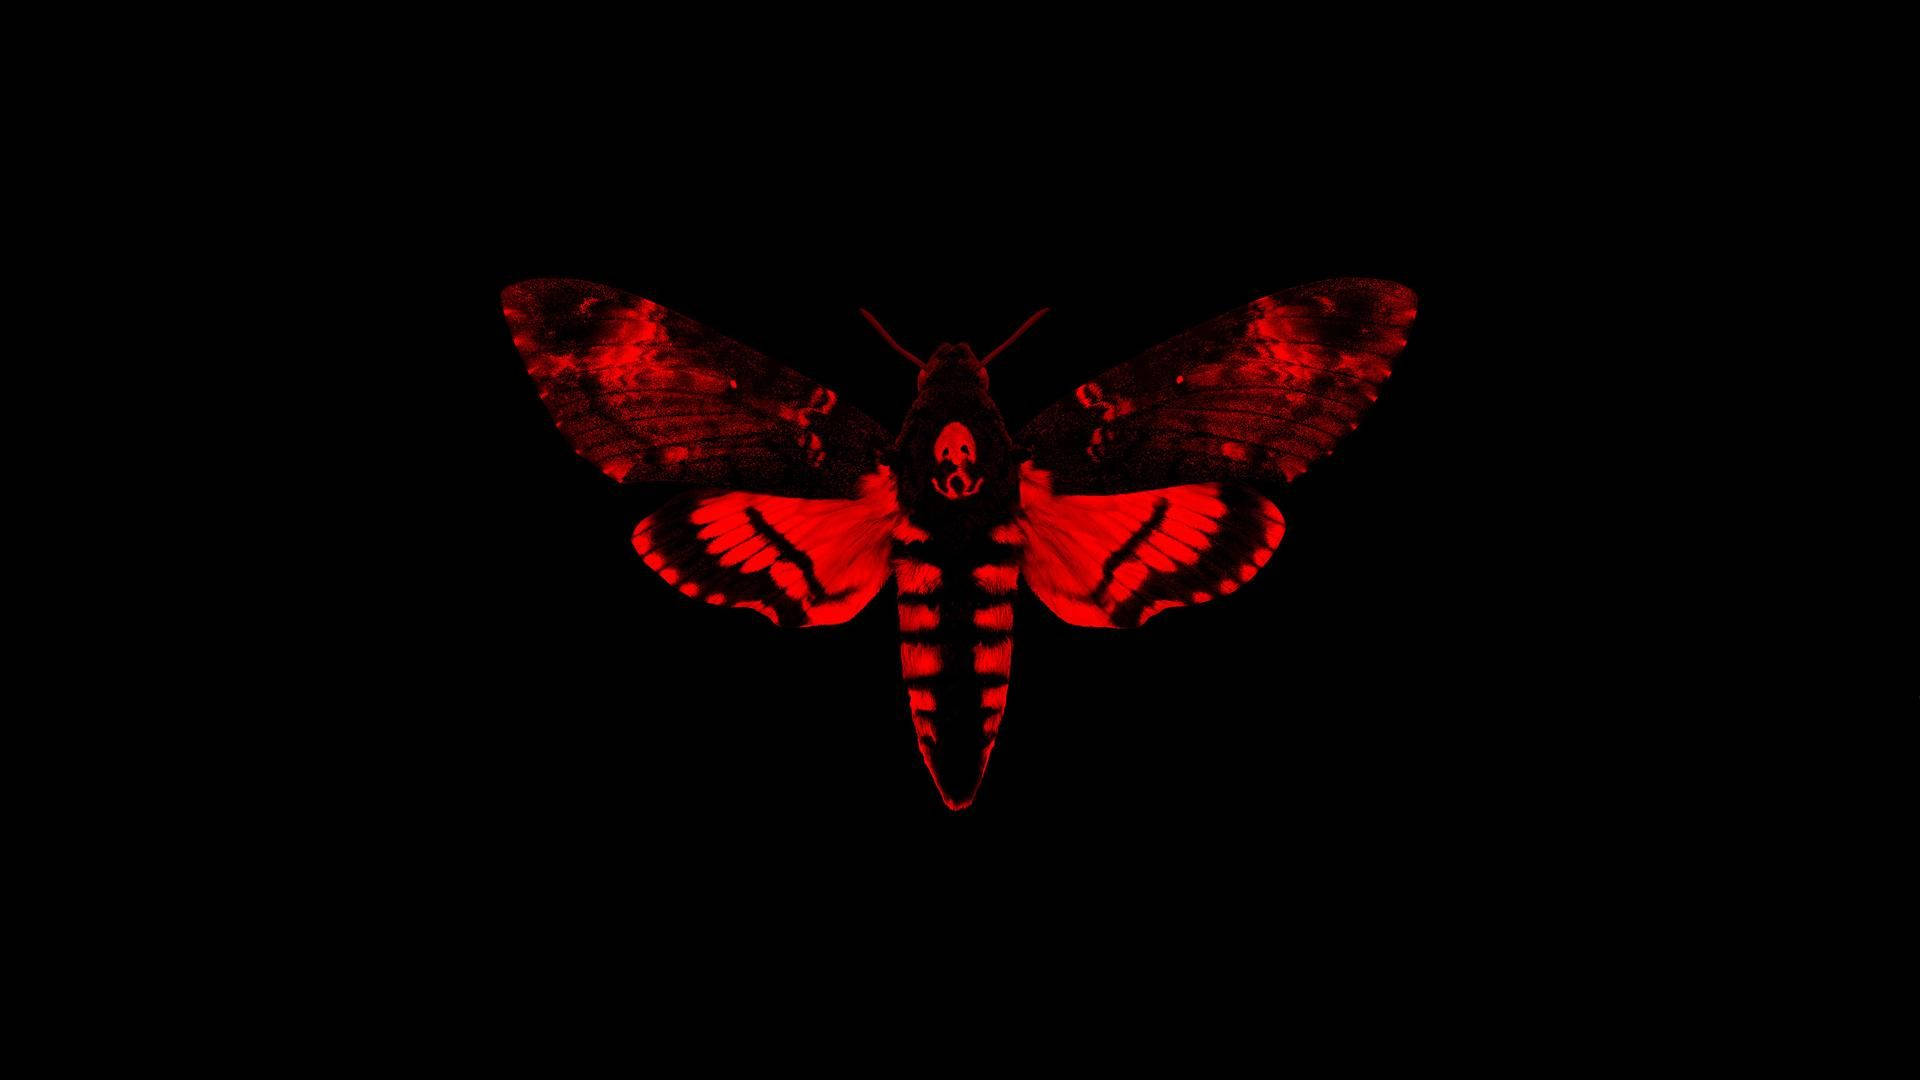 Moth Black And Red Artwork Wallpaper